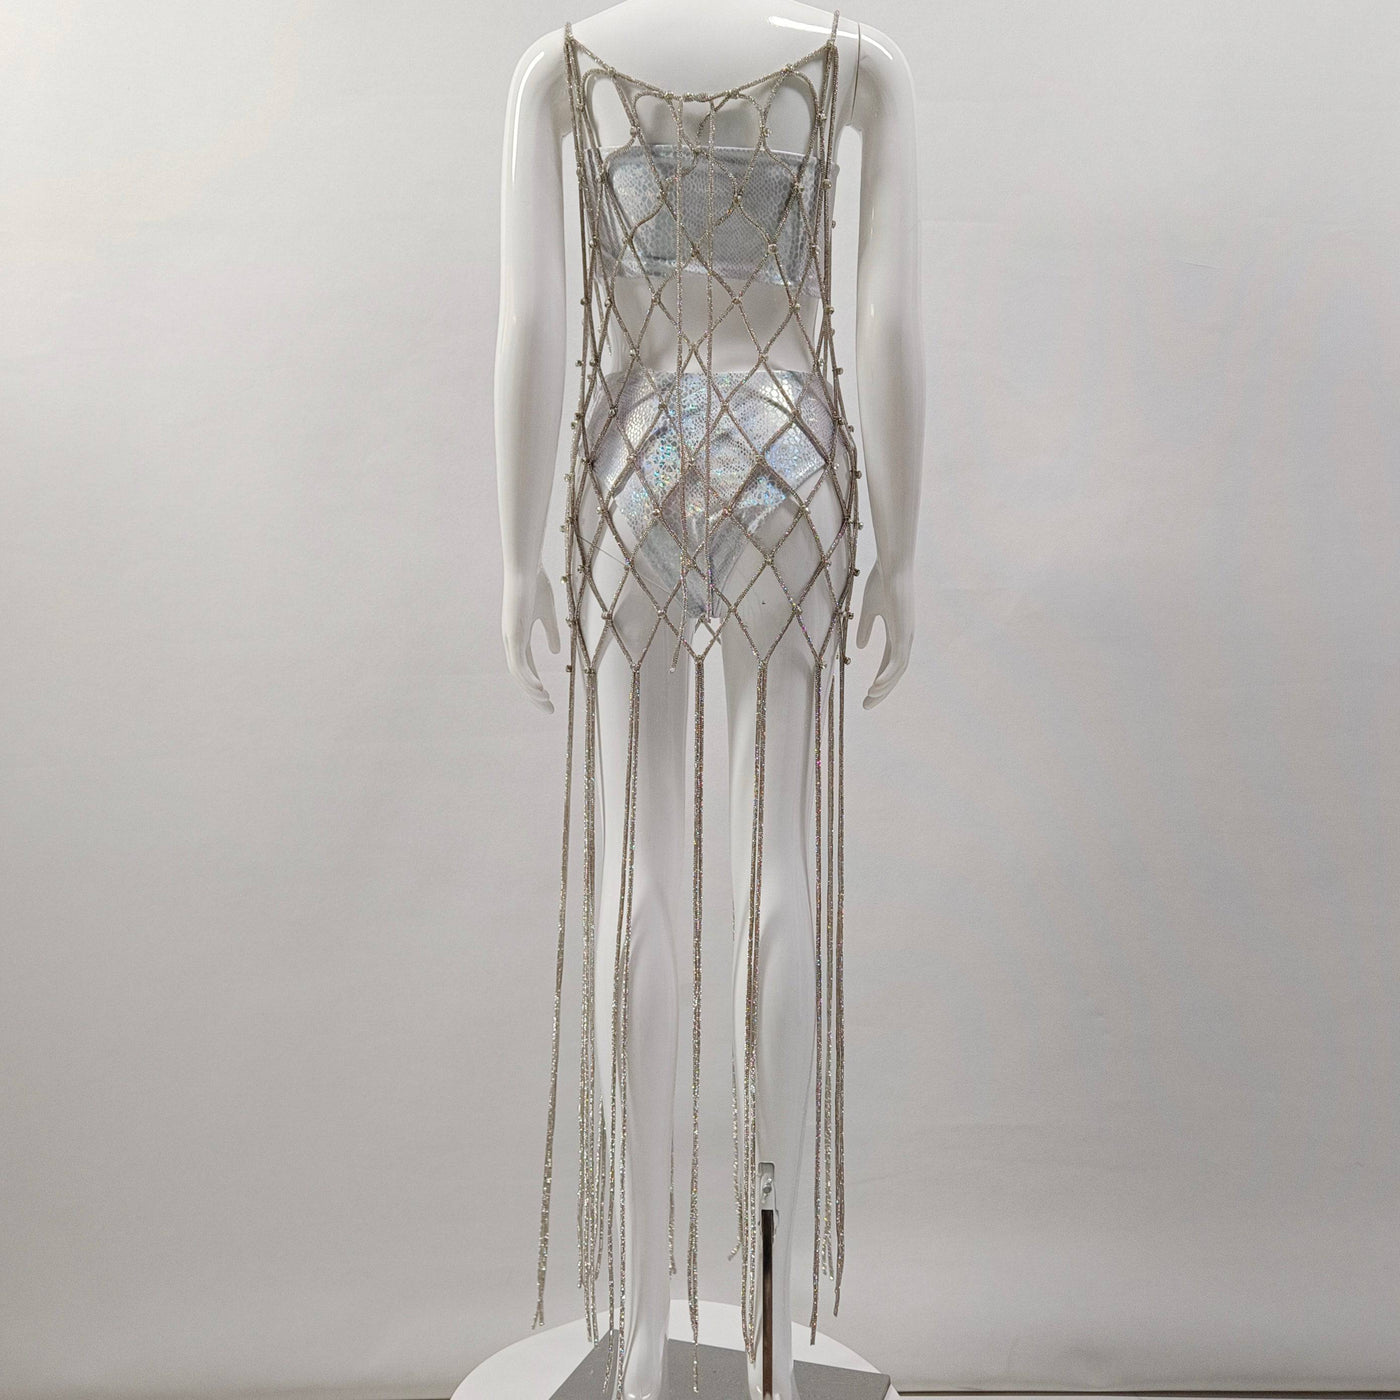 Briseida Hand-woven Crystal Diamond Tassel Dress - Hot fashionista